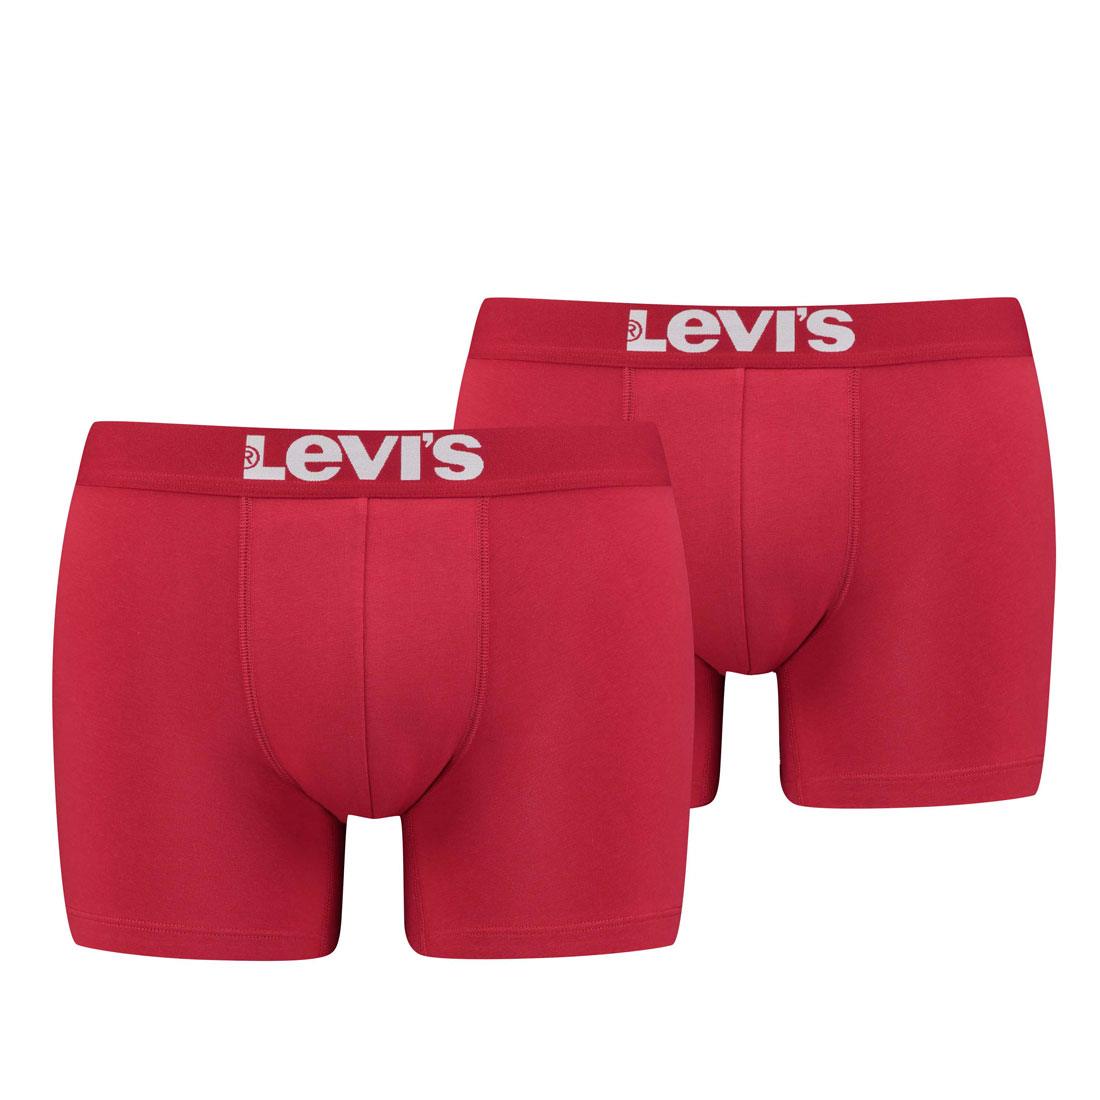 Levi's Herren Levis Men SOLID Basic Boxer 2P Boxershorts, Rot (Chili Pepper 186), XX-Large (Herstellergröße: 050) (2er Pack)